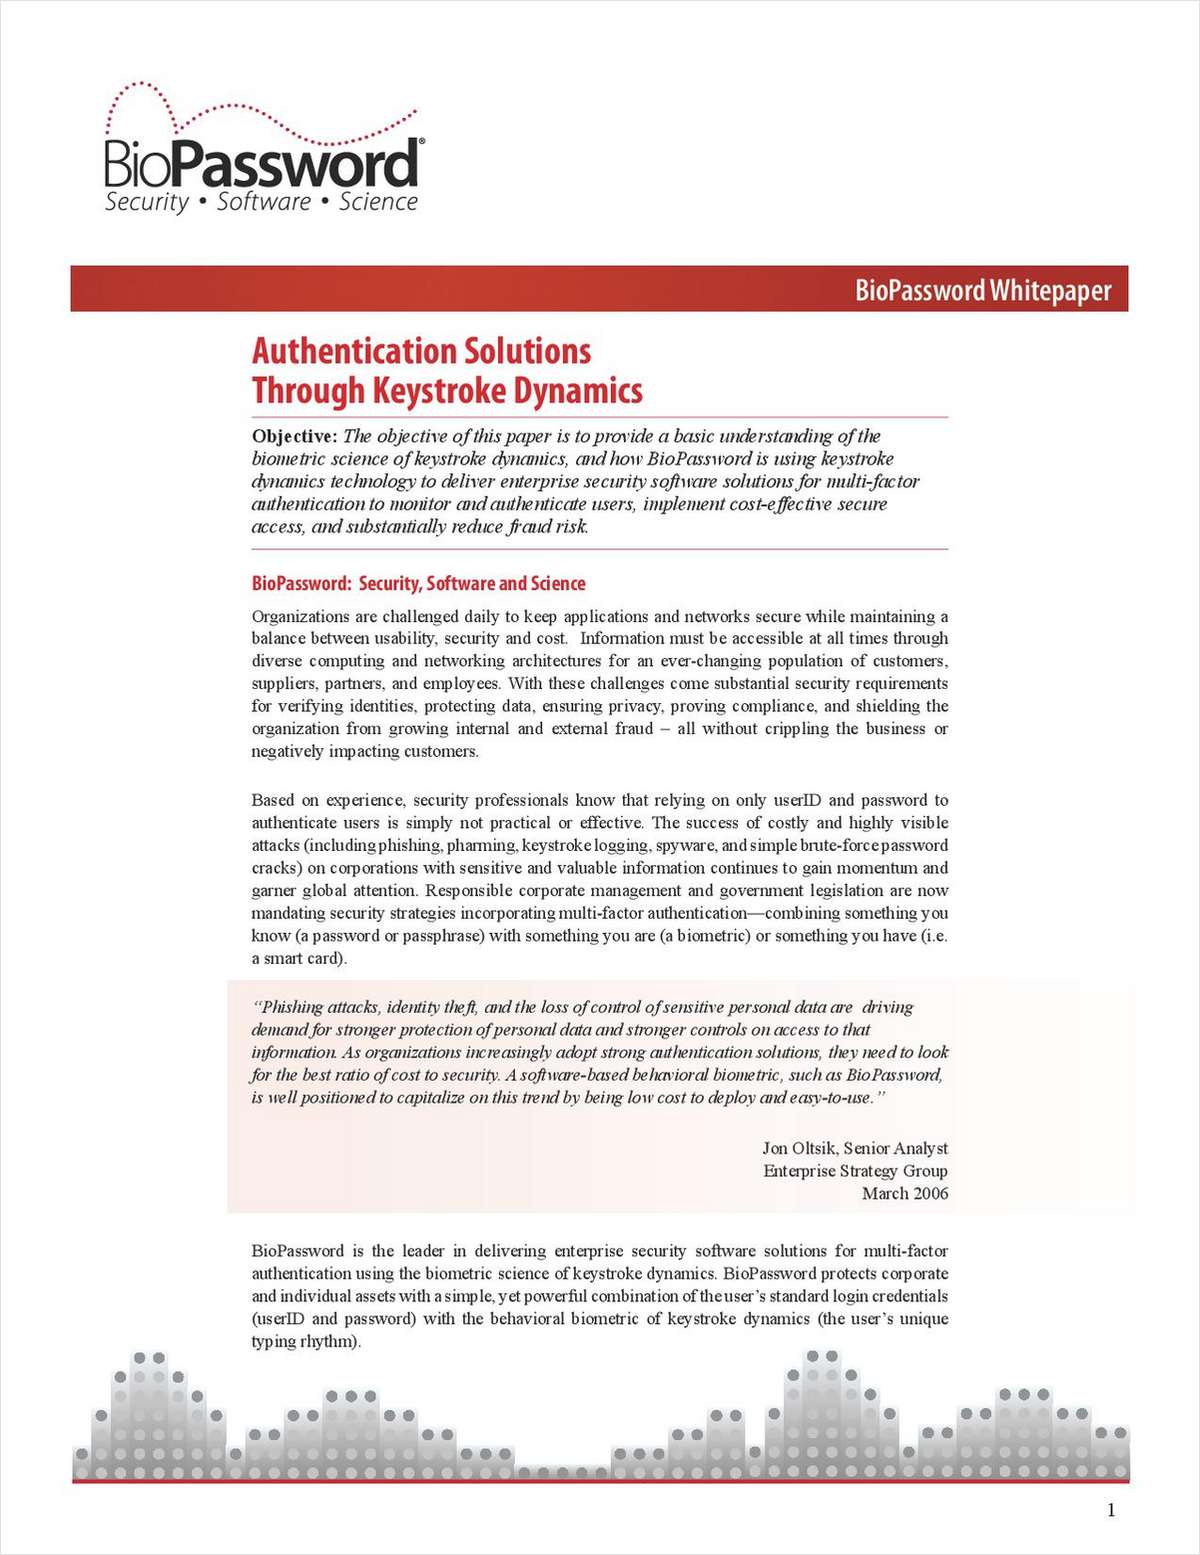 Authentication Solutions Through Keystroke Dynamics